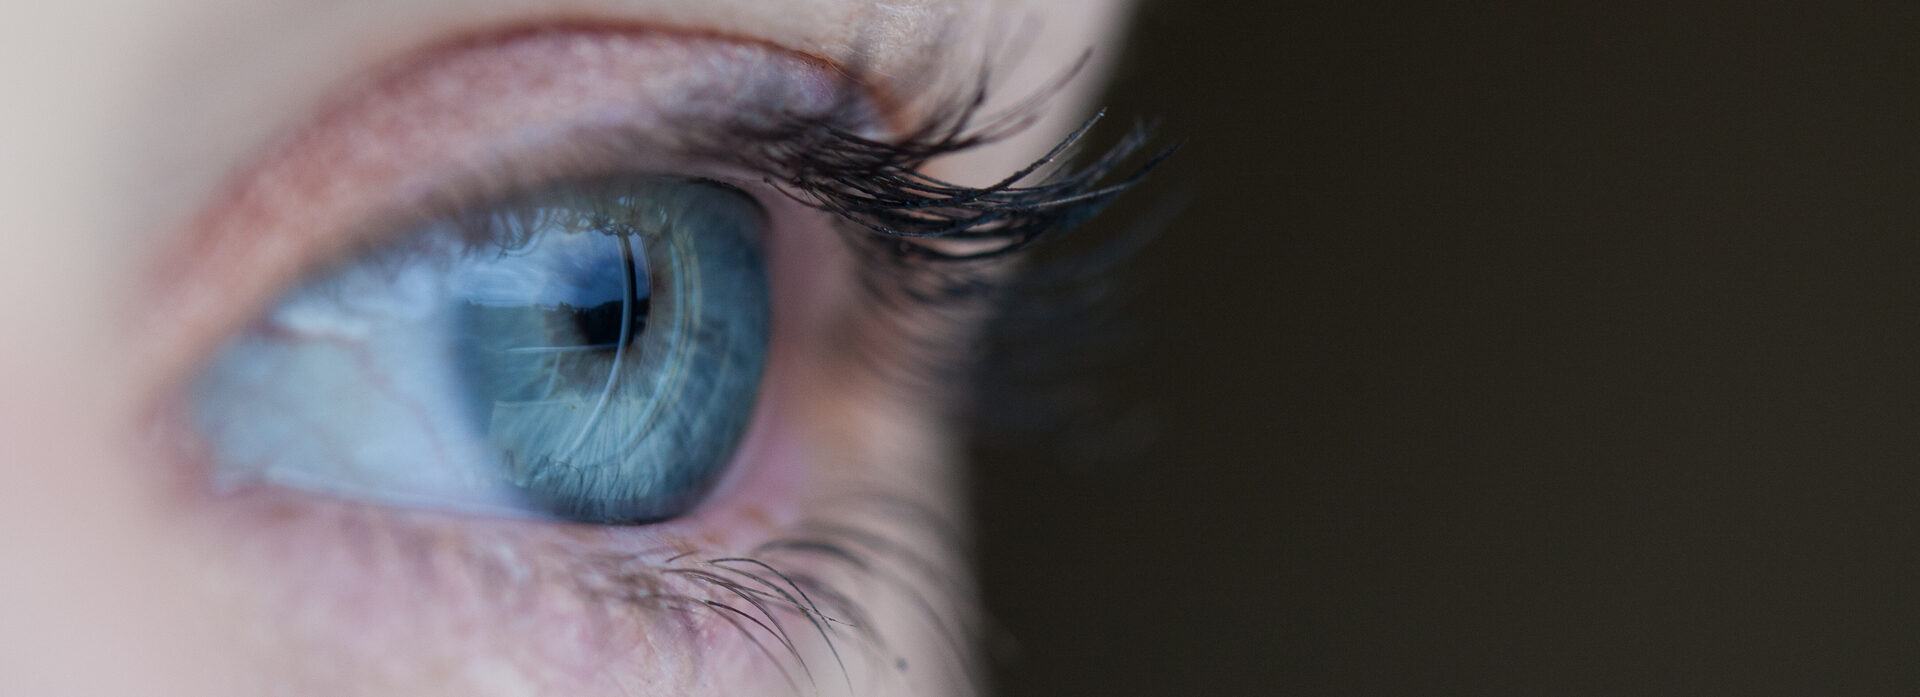 close up of an eye, pre-optometry